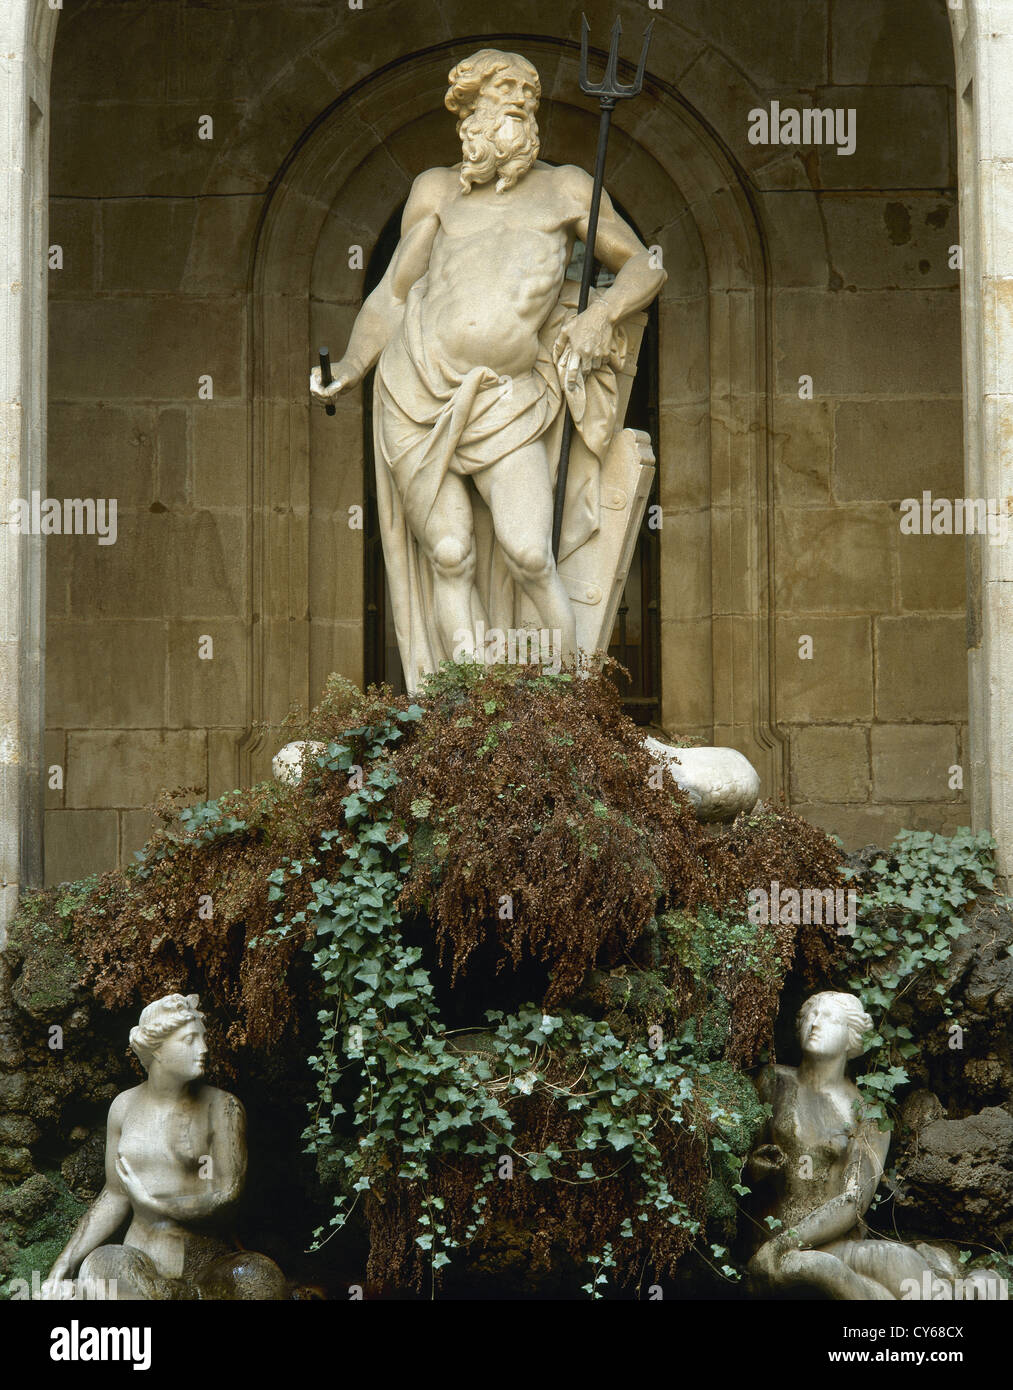 España. Barcelona. Estatua de Neptuno por Nicolau Trave. Siglo XVIII. De estilo neoclásico. Fuente. La Llotja. Foto de stock